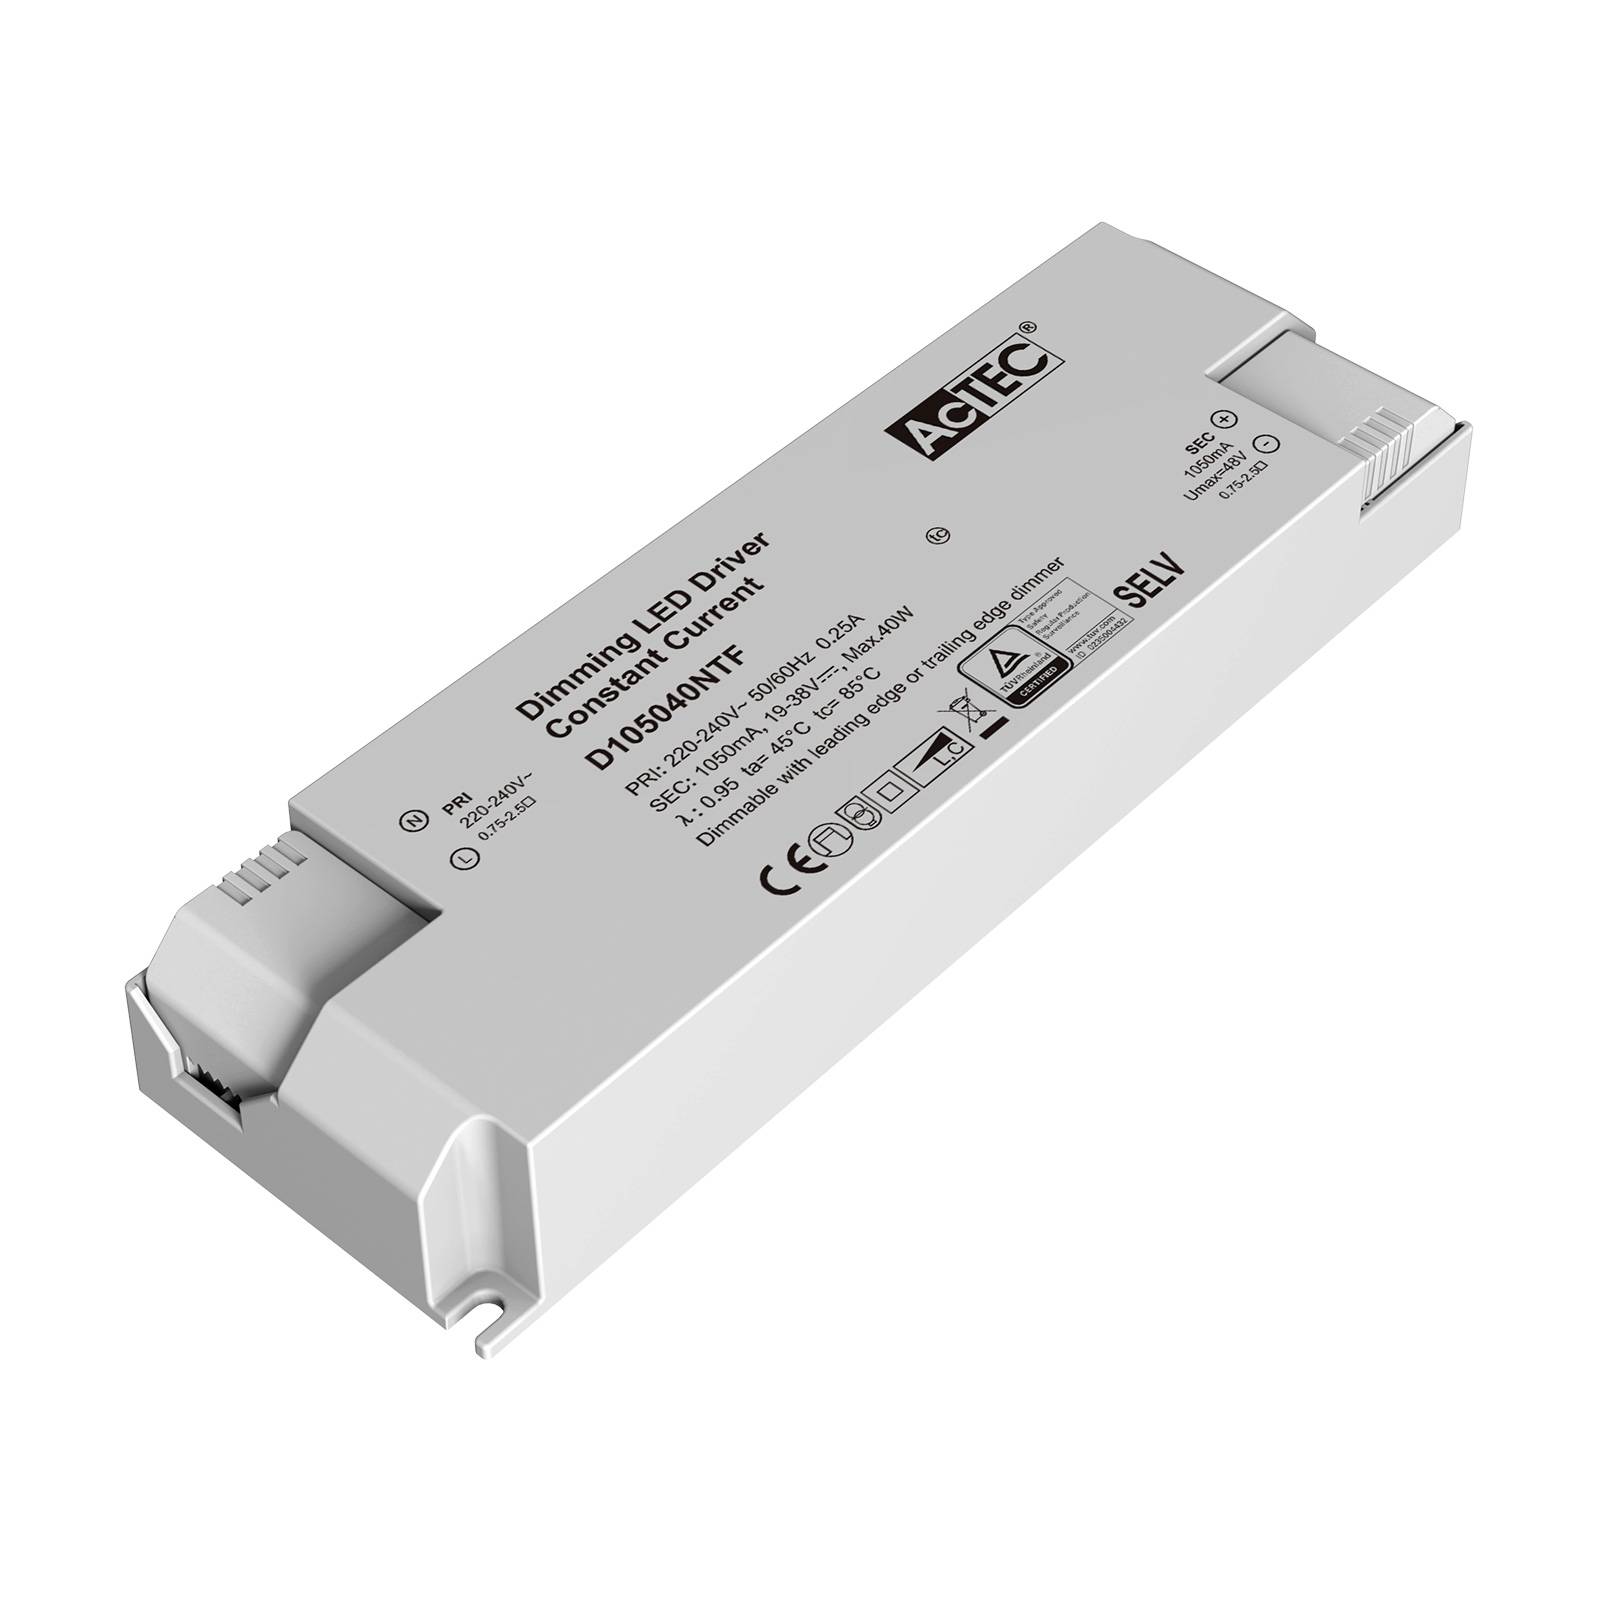 AcTEC Triac LED vezérlő CC max. 40W 1 050mA